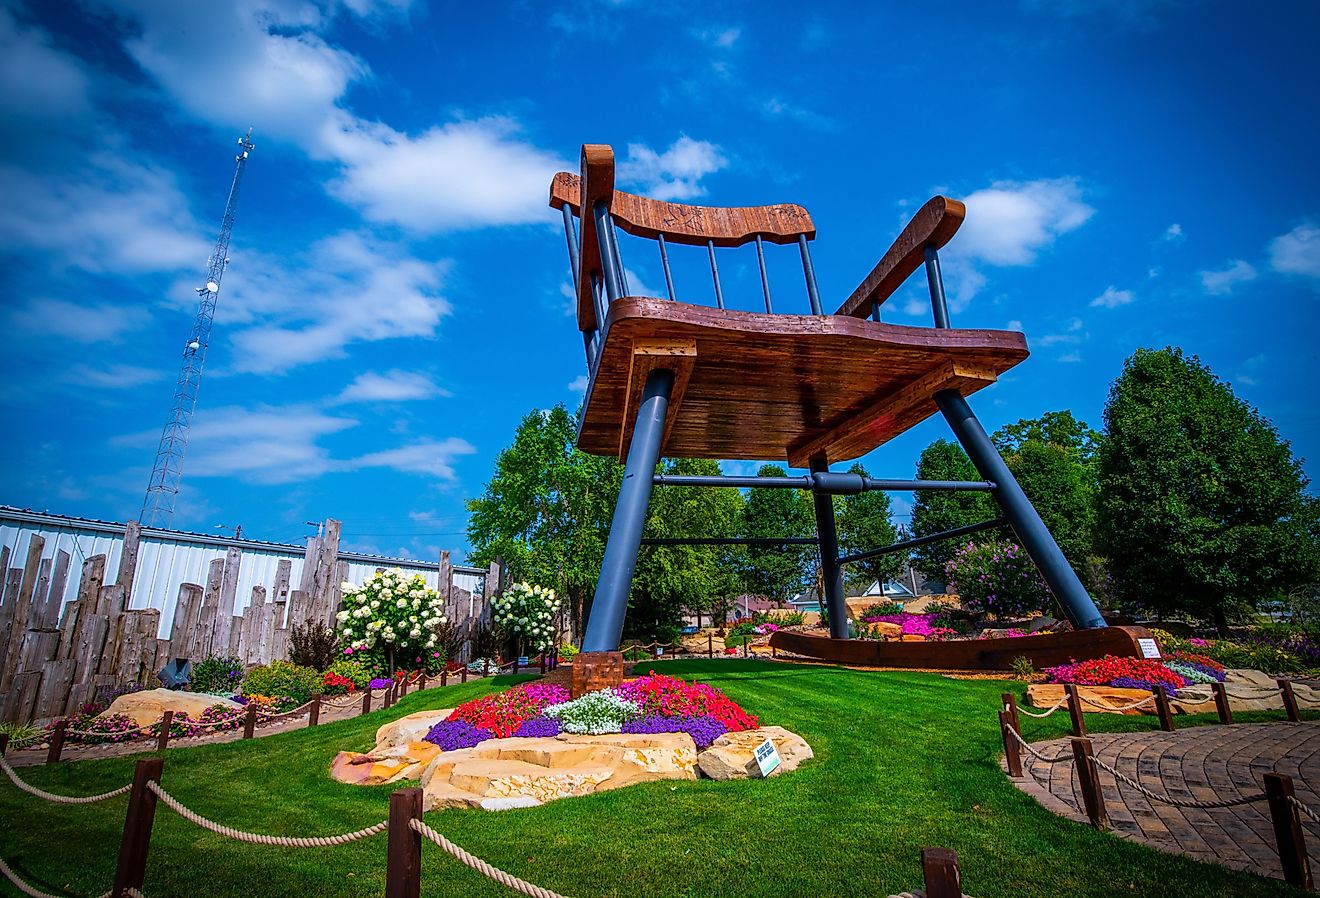 Giant wooden rocking chair in Casey, Illinois. Image credit RozenskiP via Shutterstock.